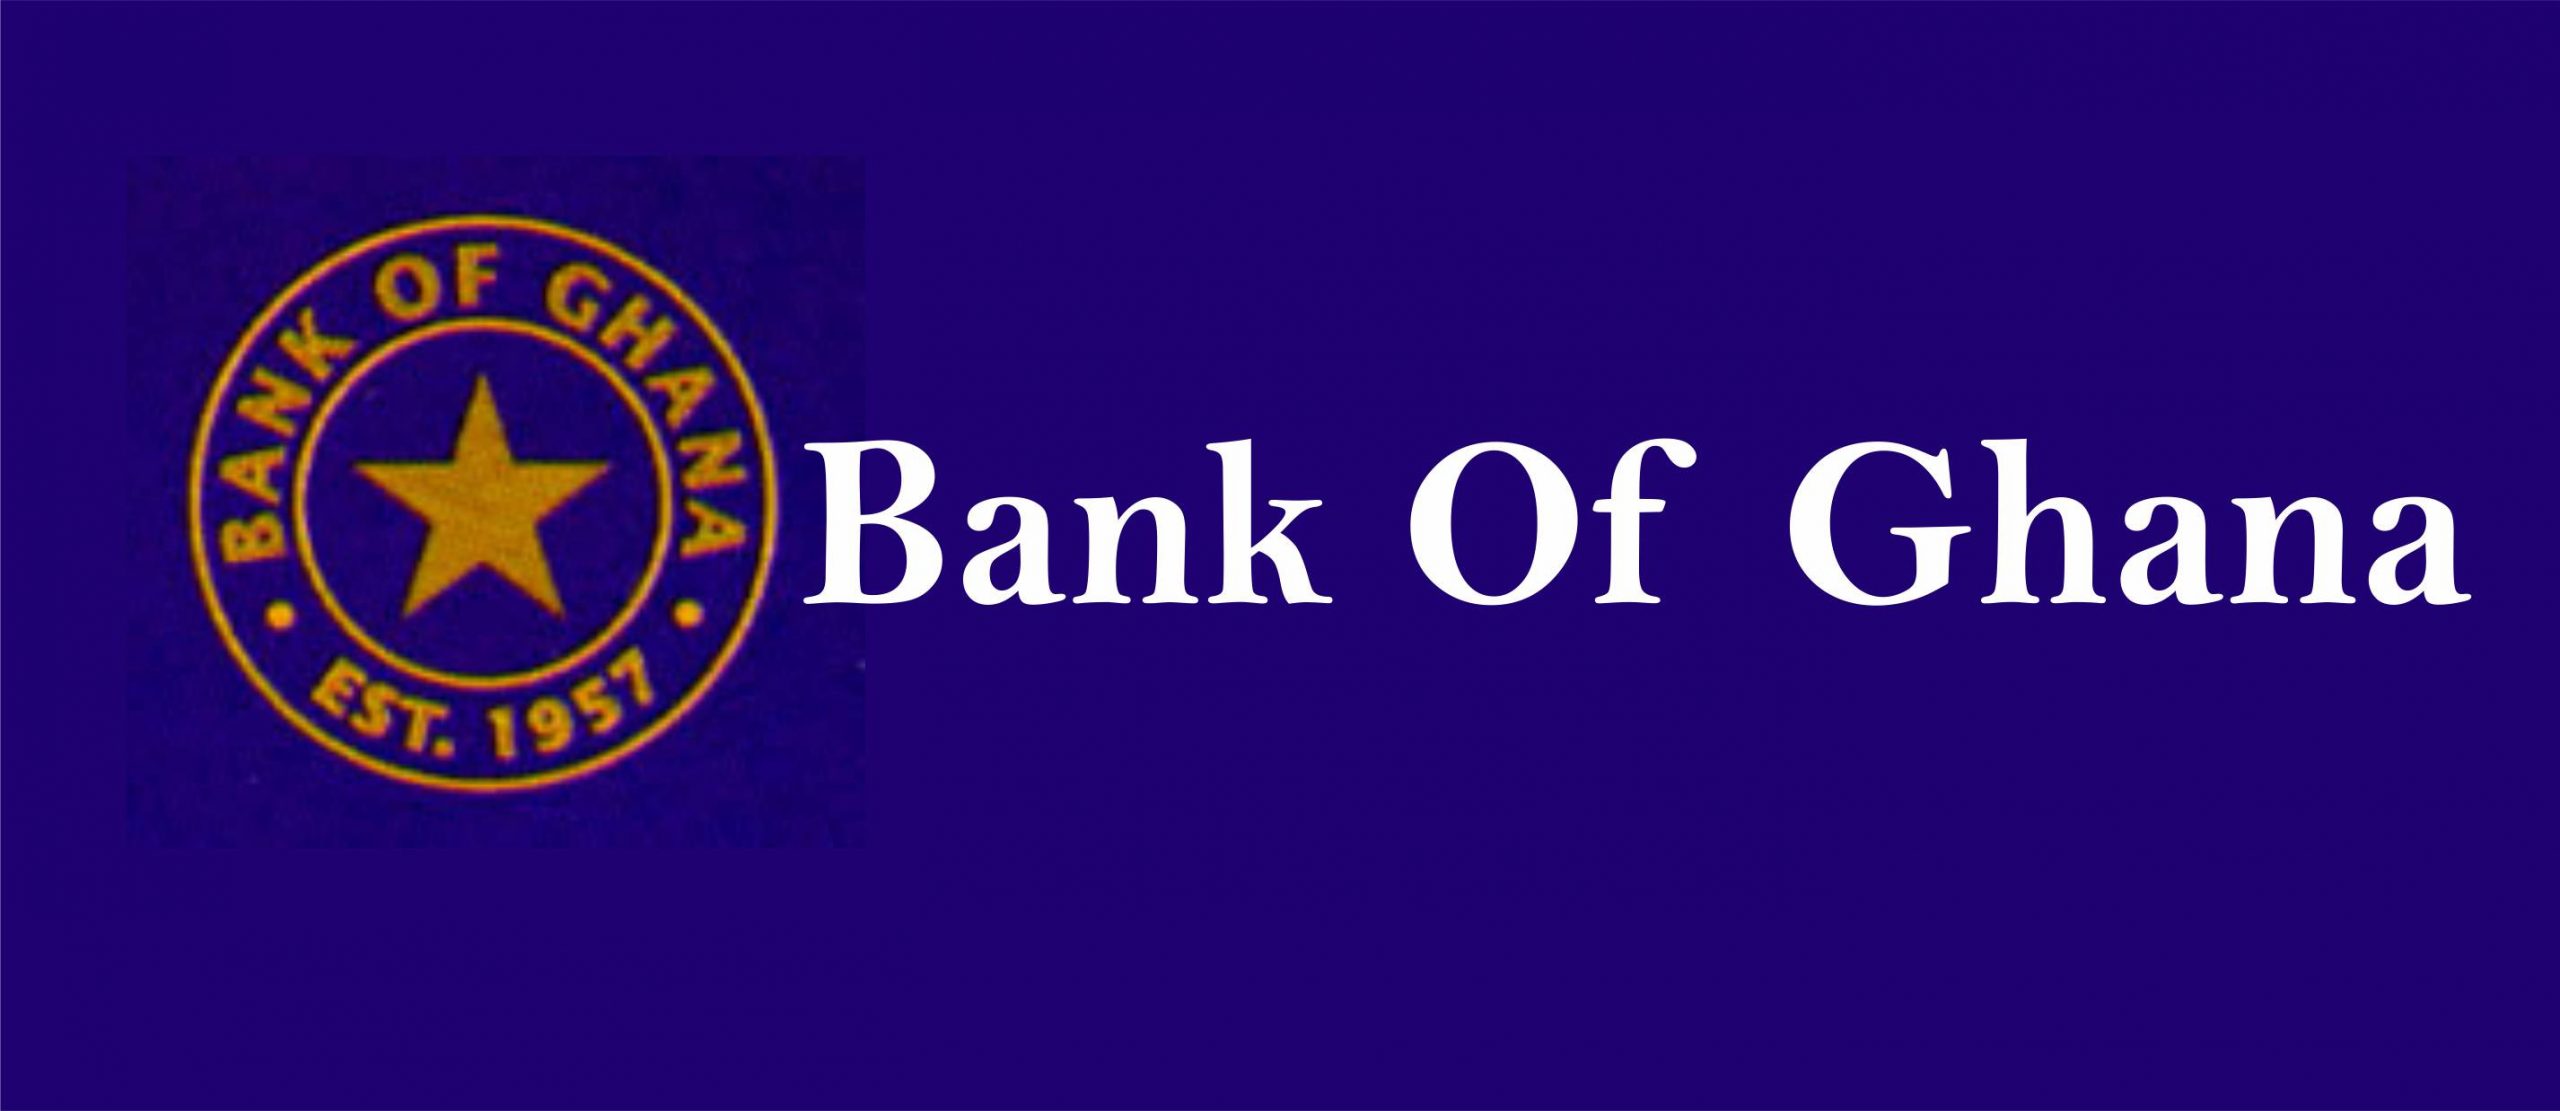 Bank of Ghana scaled